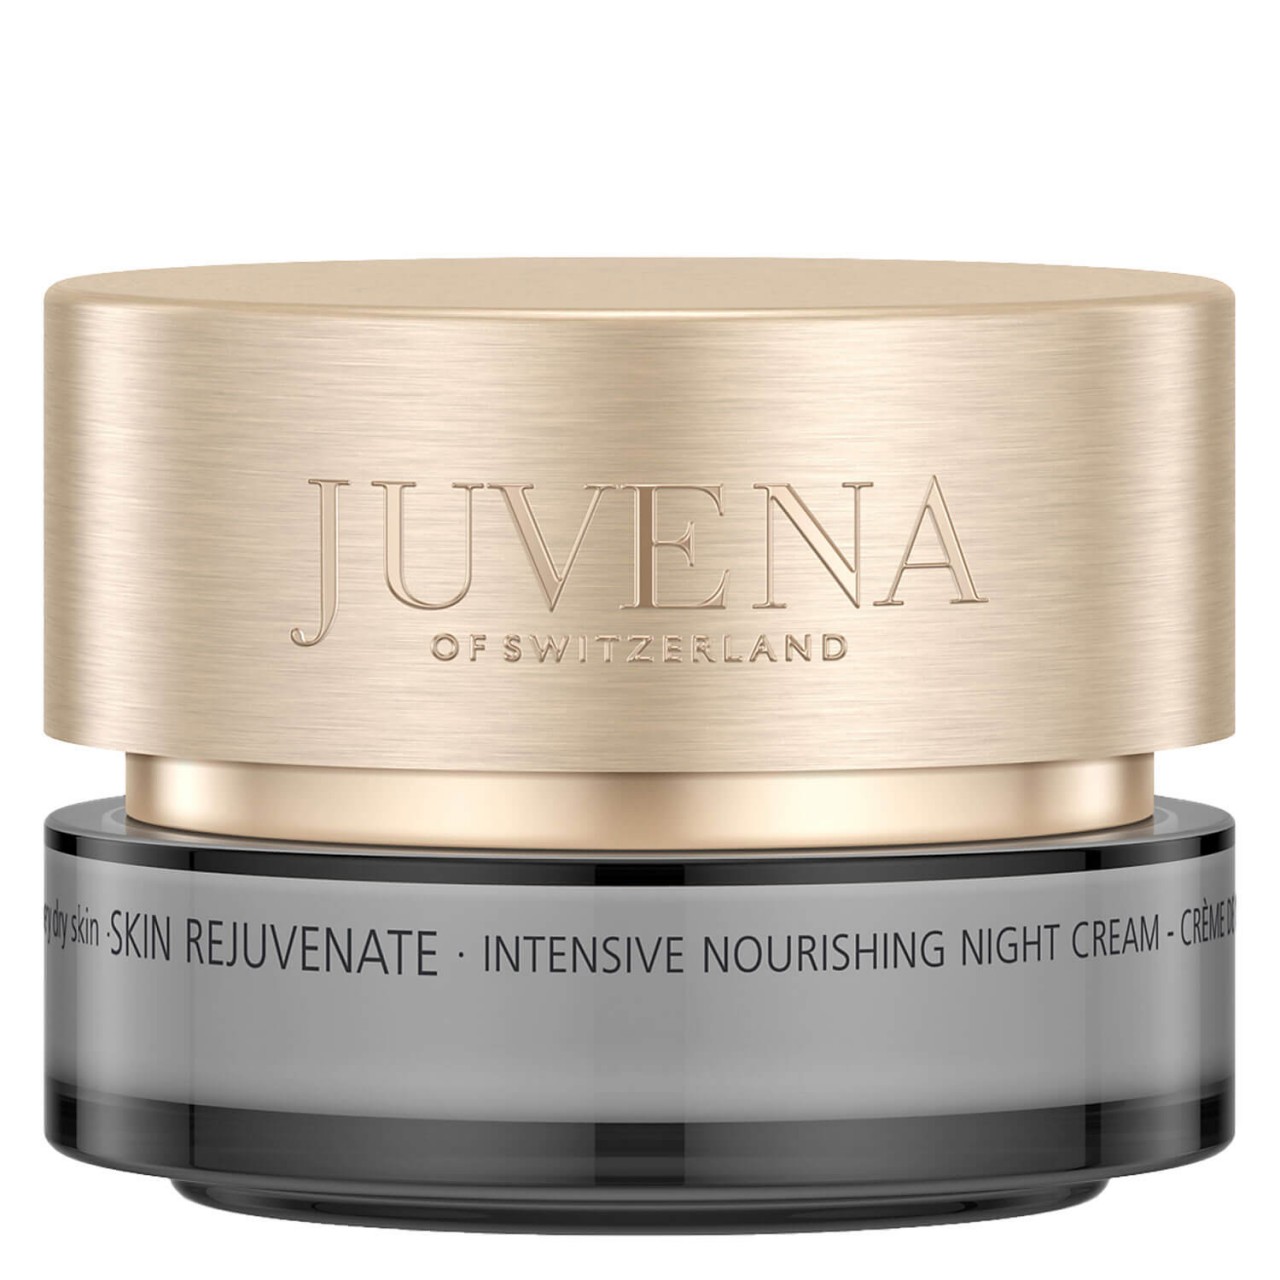 Skin Rejuvenate - Intensive Nourishing Night Cream von JUVENA